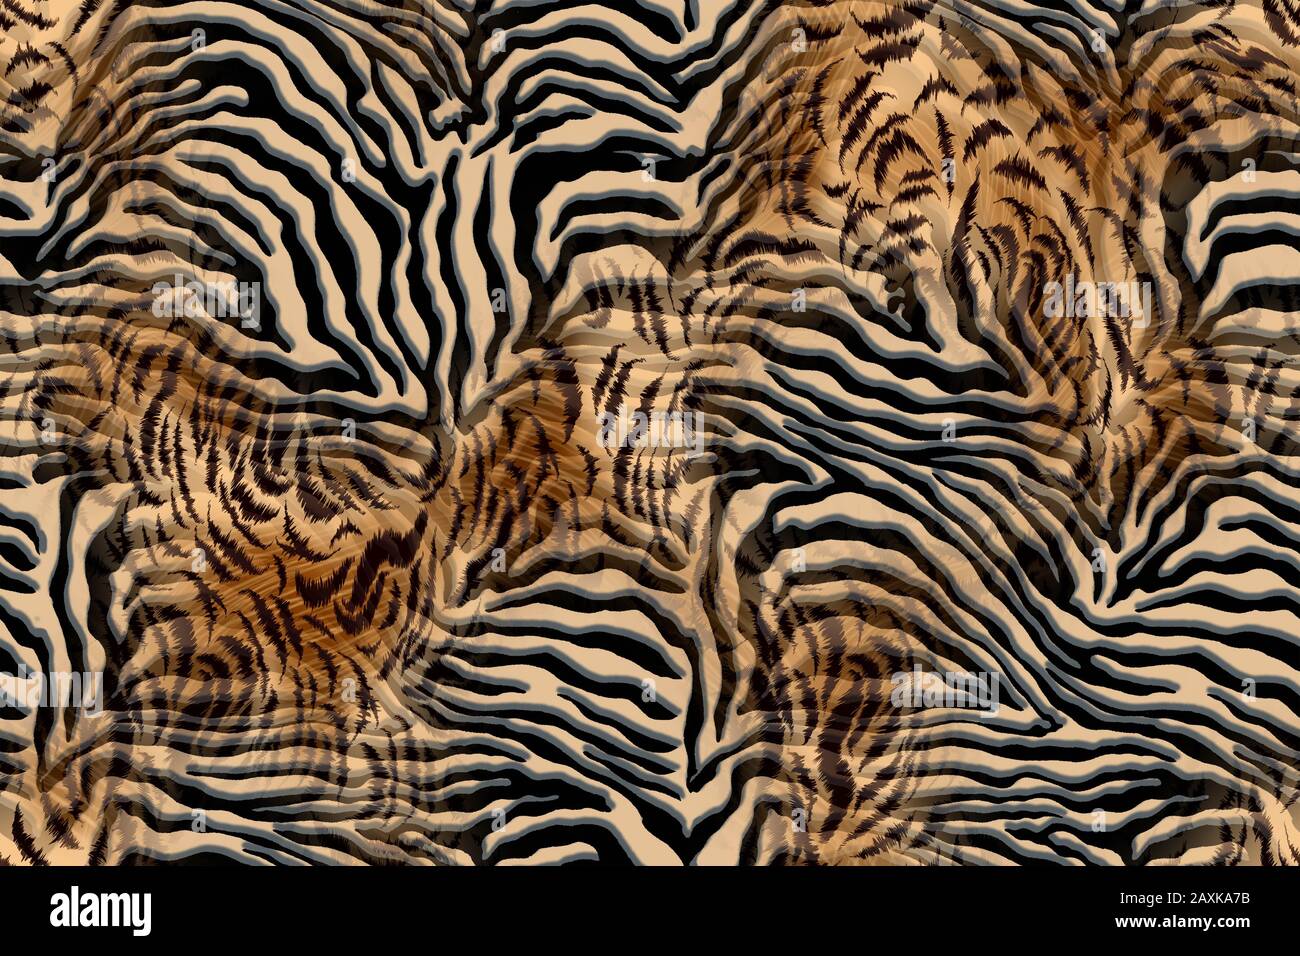 Schwarz-weißes Zebra - leo-mix-Muster, Tier-Hautmuster. - Abbildung Stockfoto